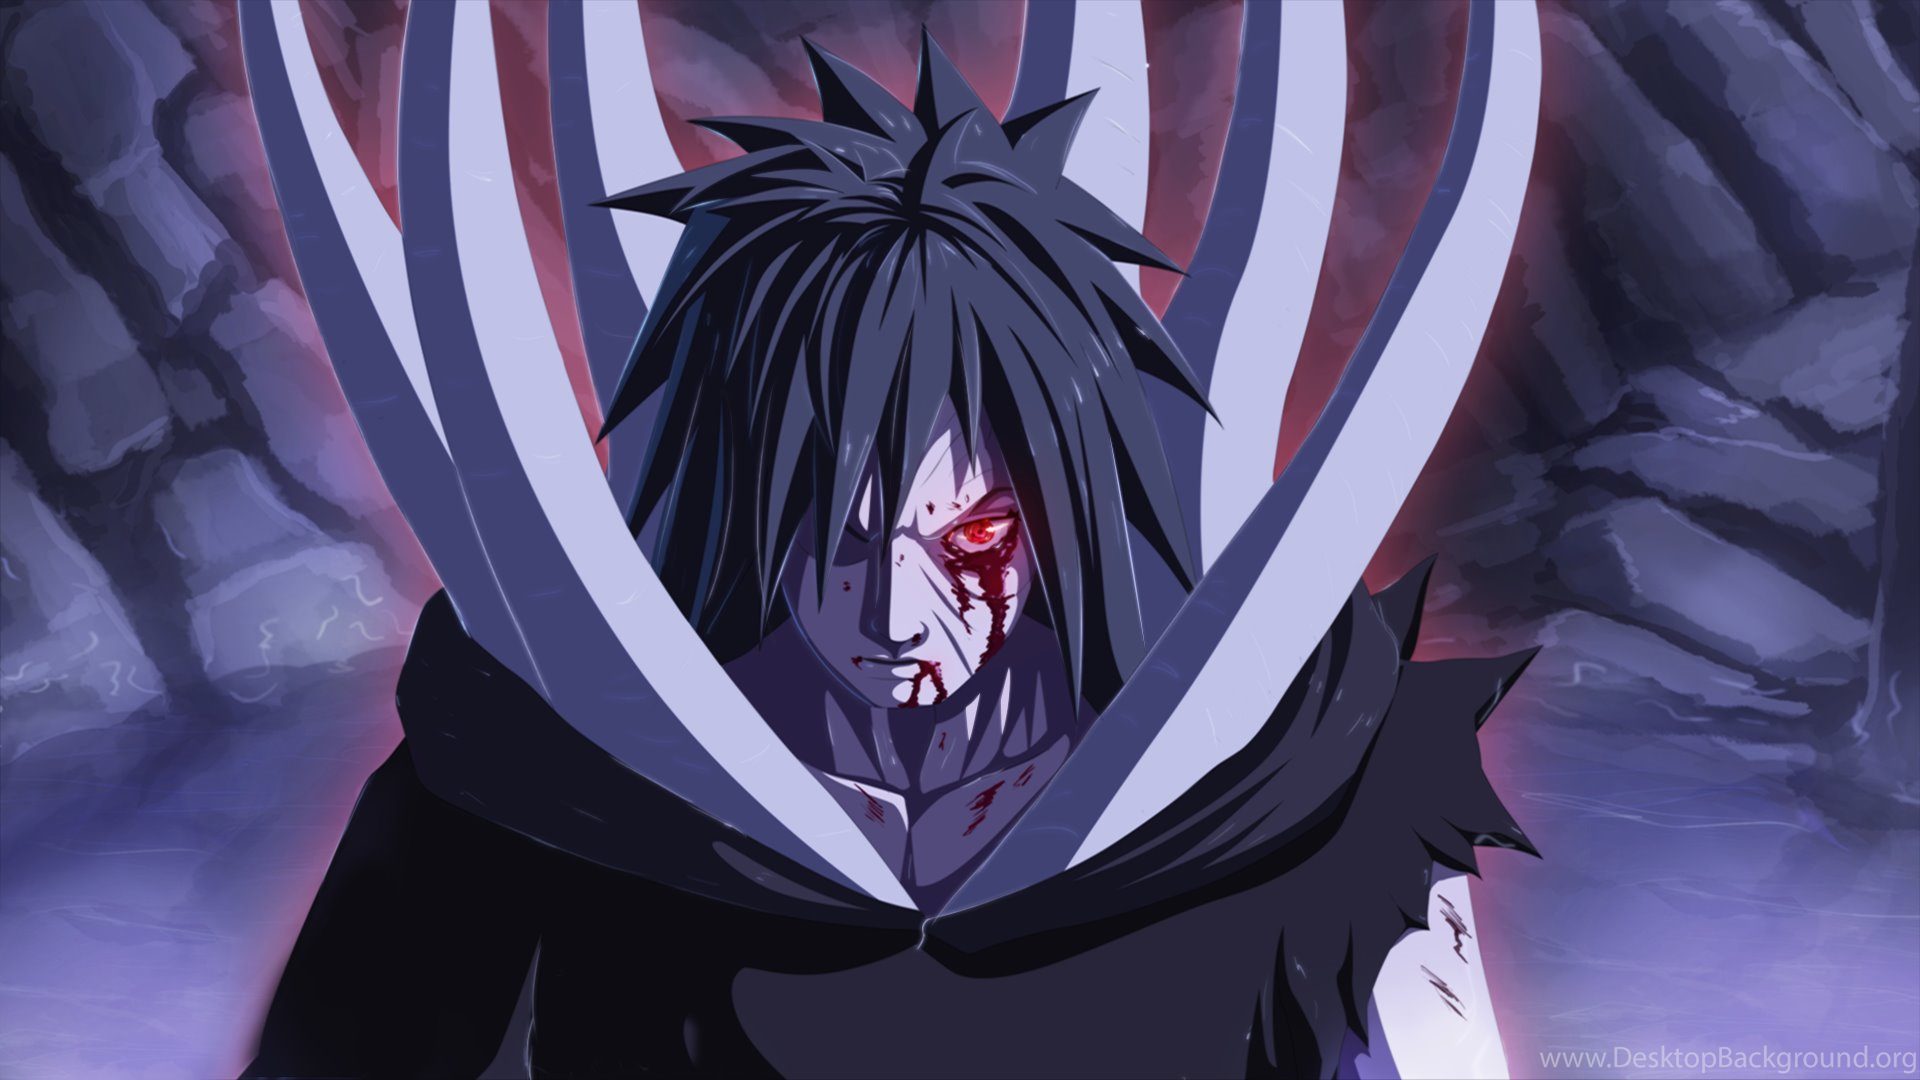 Tổng hợp Obito background 4k đẹp nhất cho fan Anime Naruto